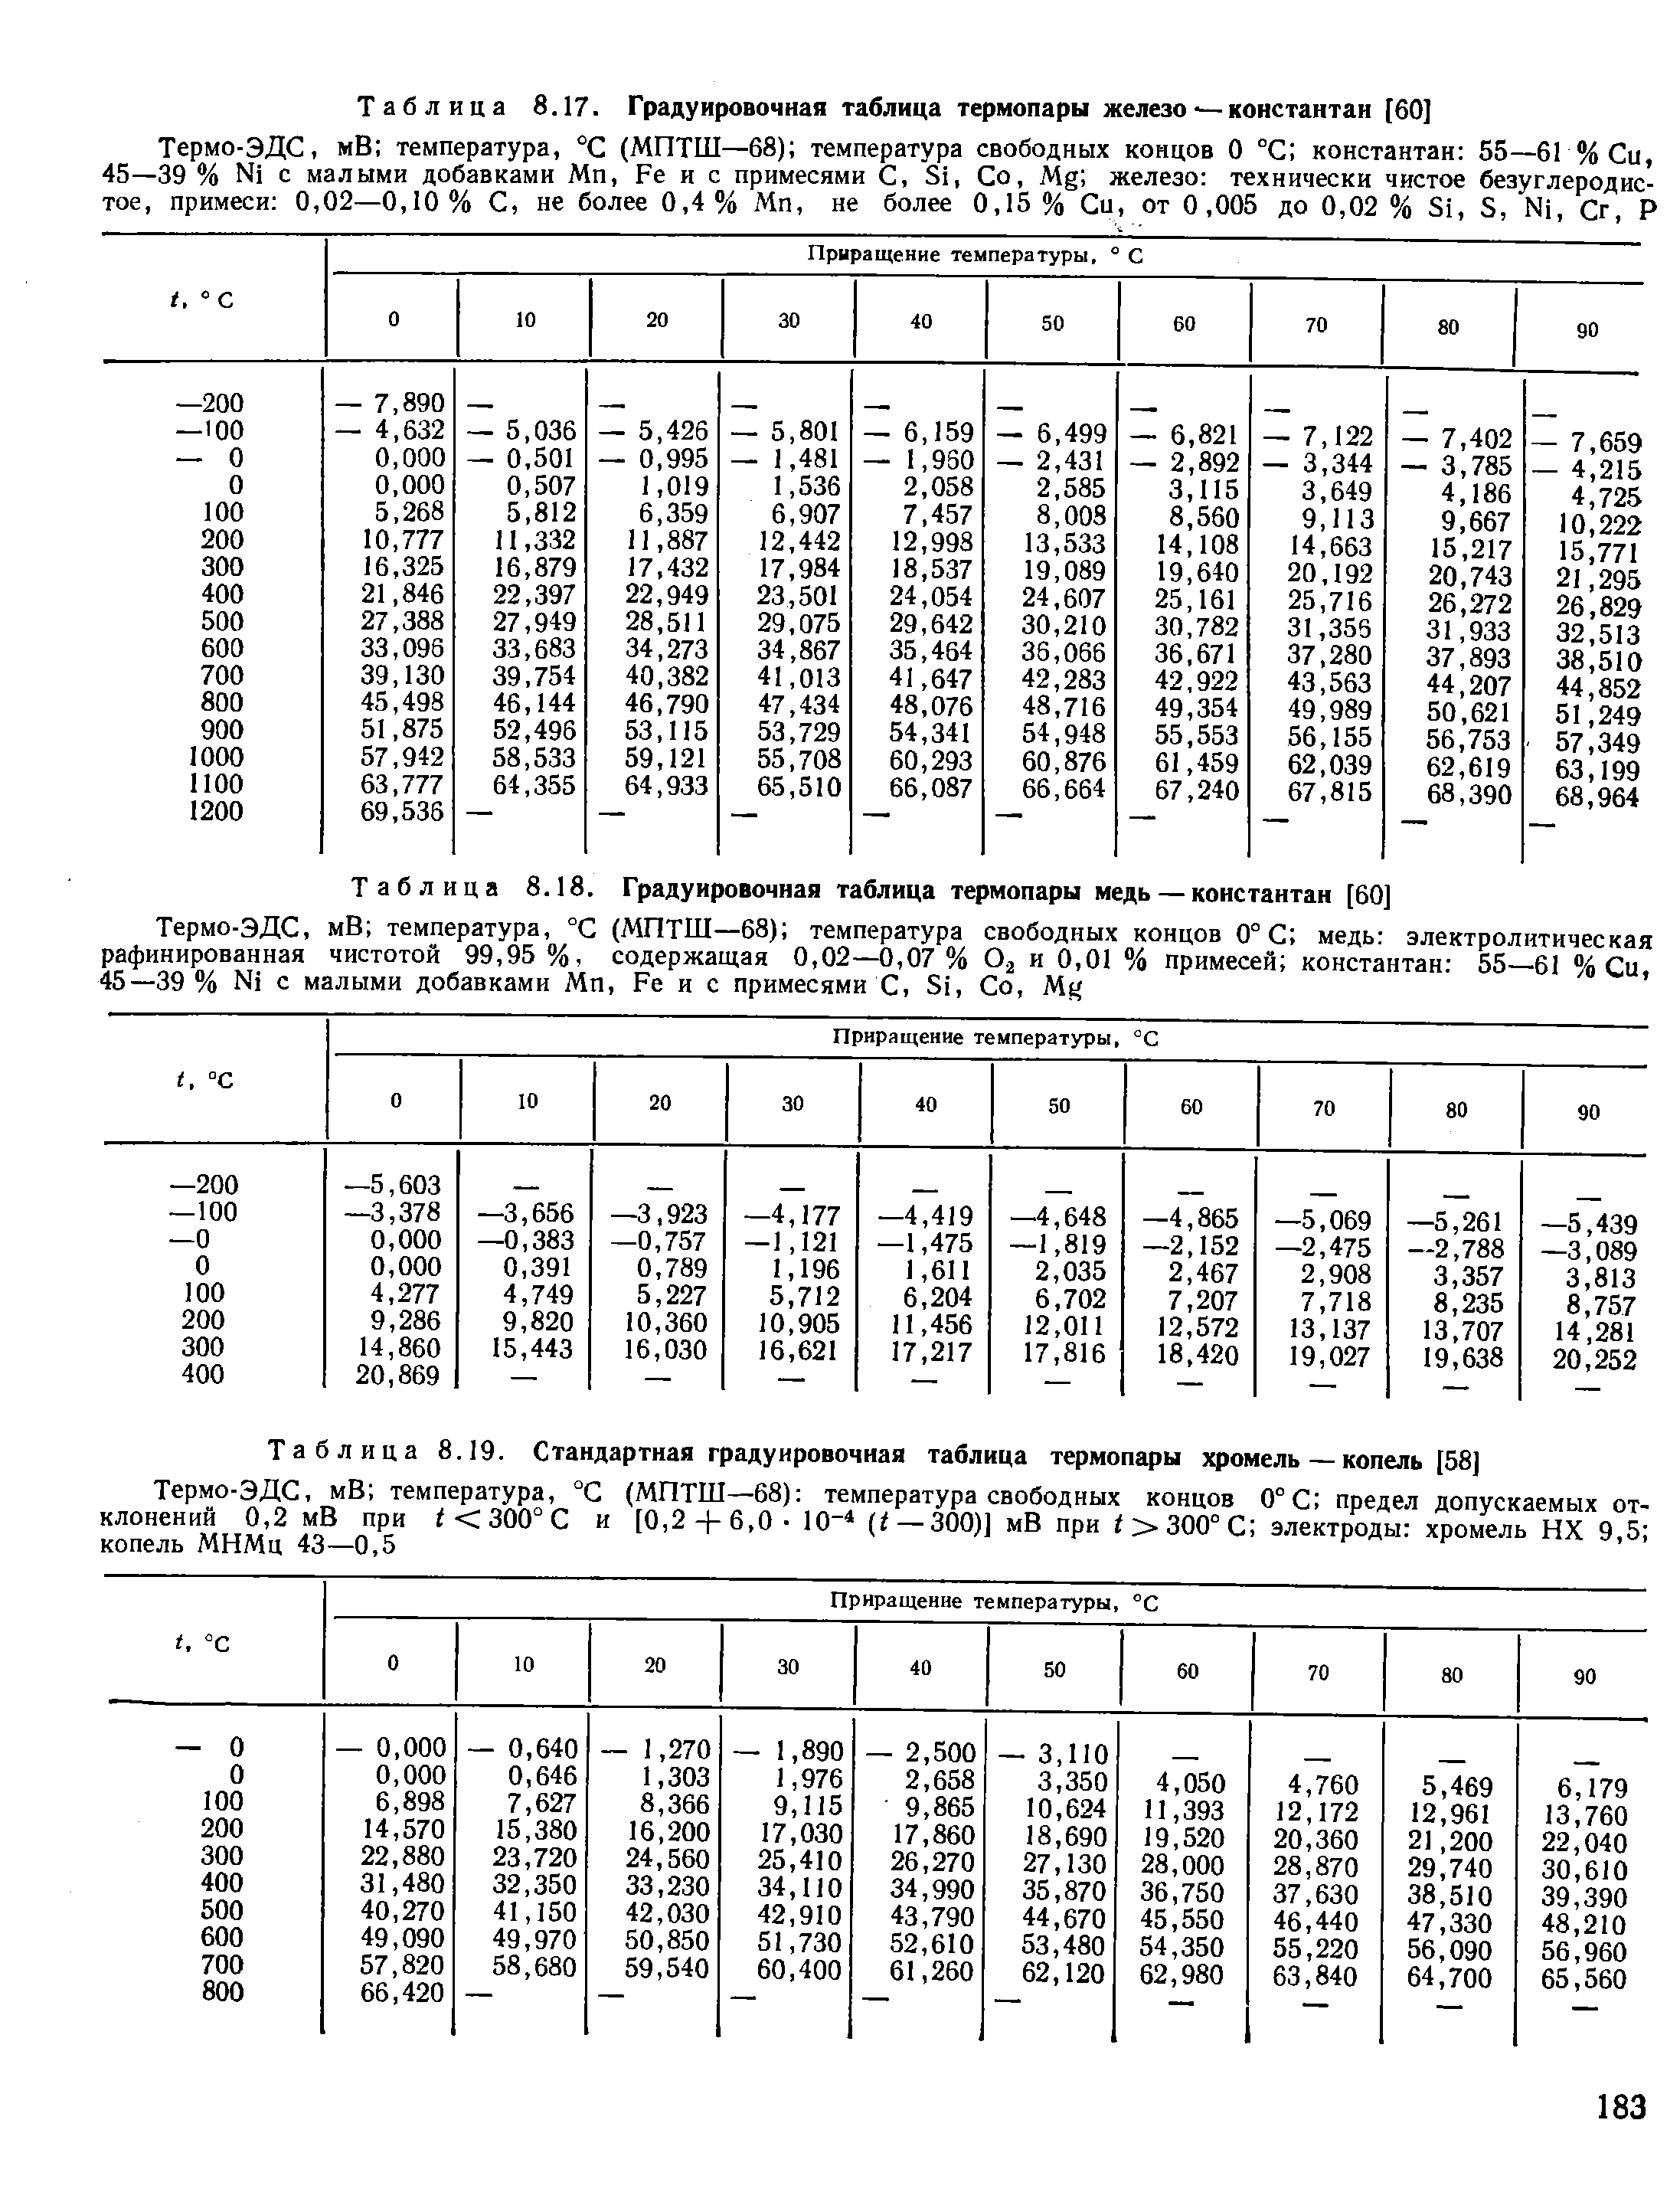 Таблица 8.19. <a href="/info/276545">Стандартная градуировочная таблица</a> термопары хромель — копель [58]
